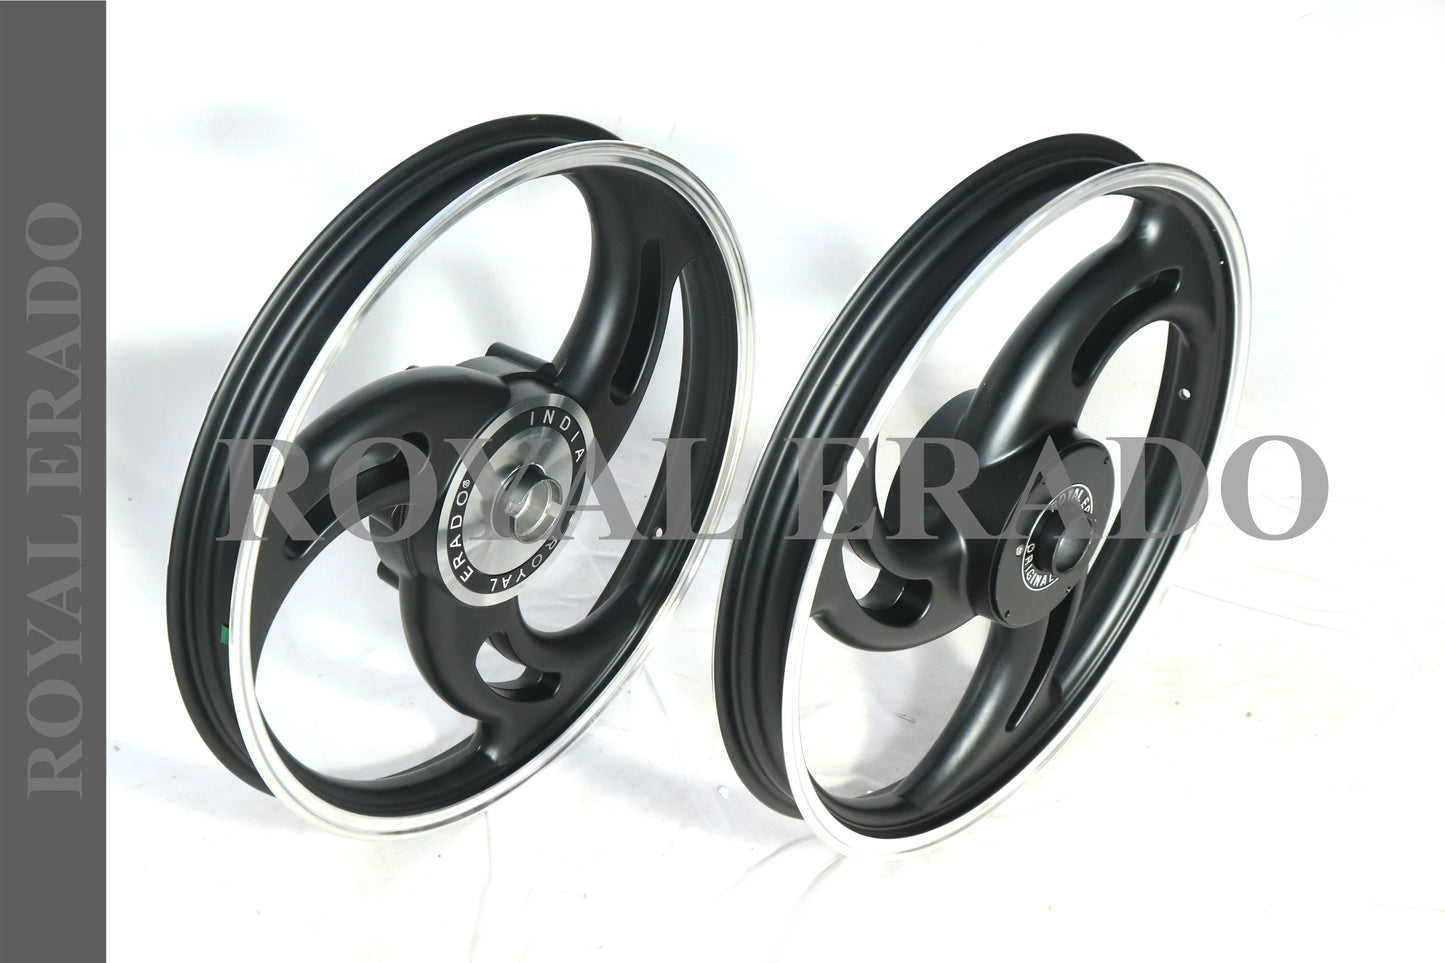 3 Spokes black Alloy Wheel set for classic single disc